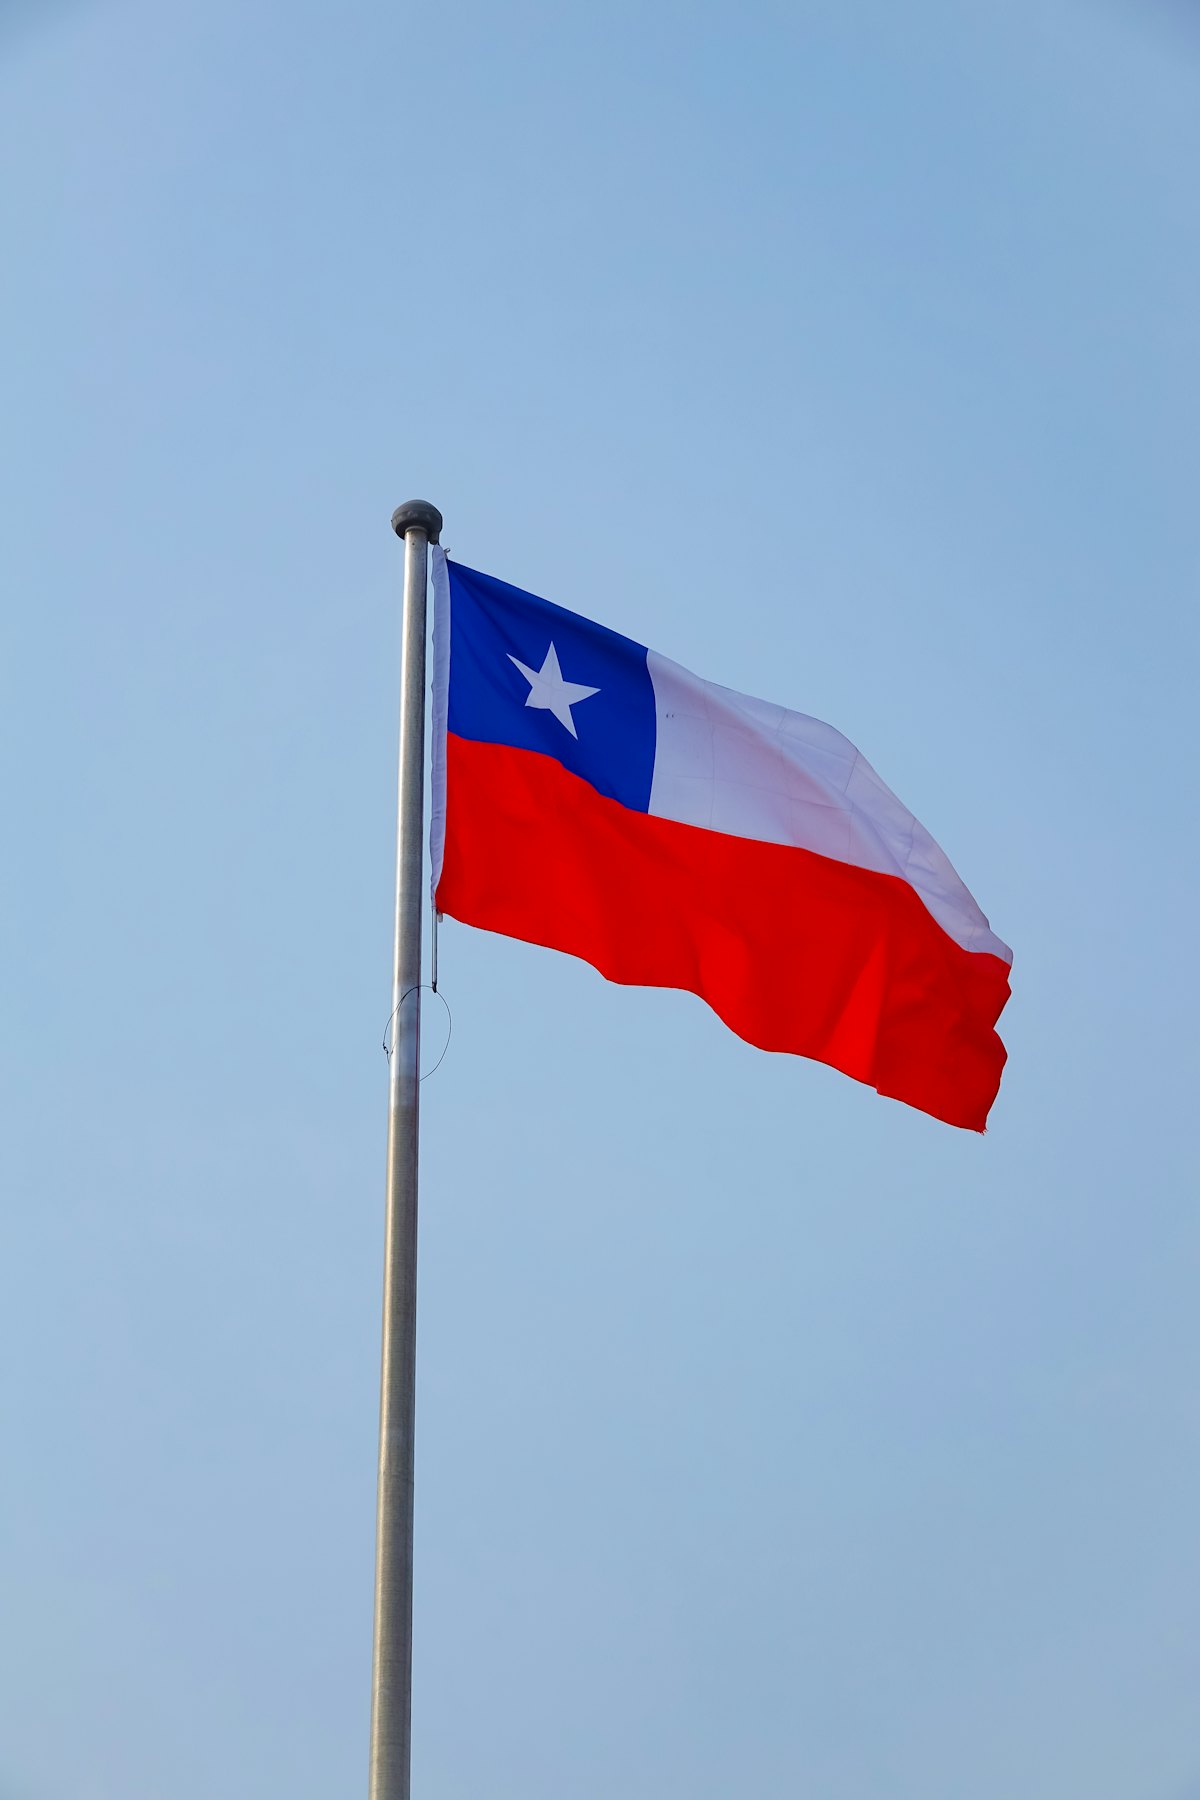 Texas flag
Qingdao, Shandong Province, China - February 9, 2022